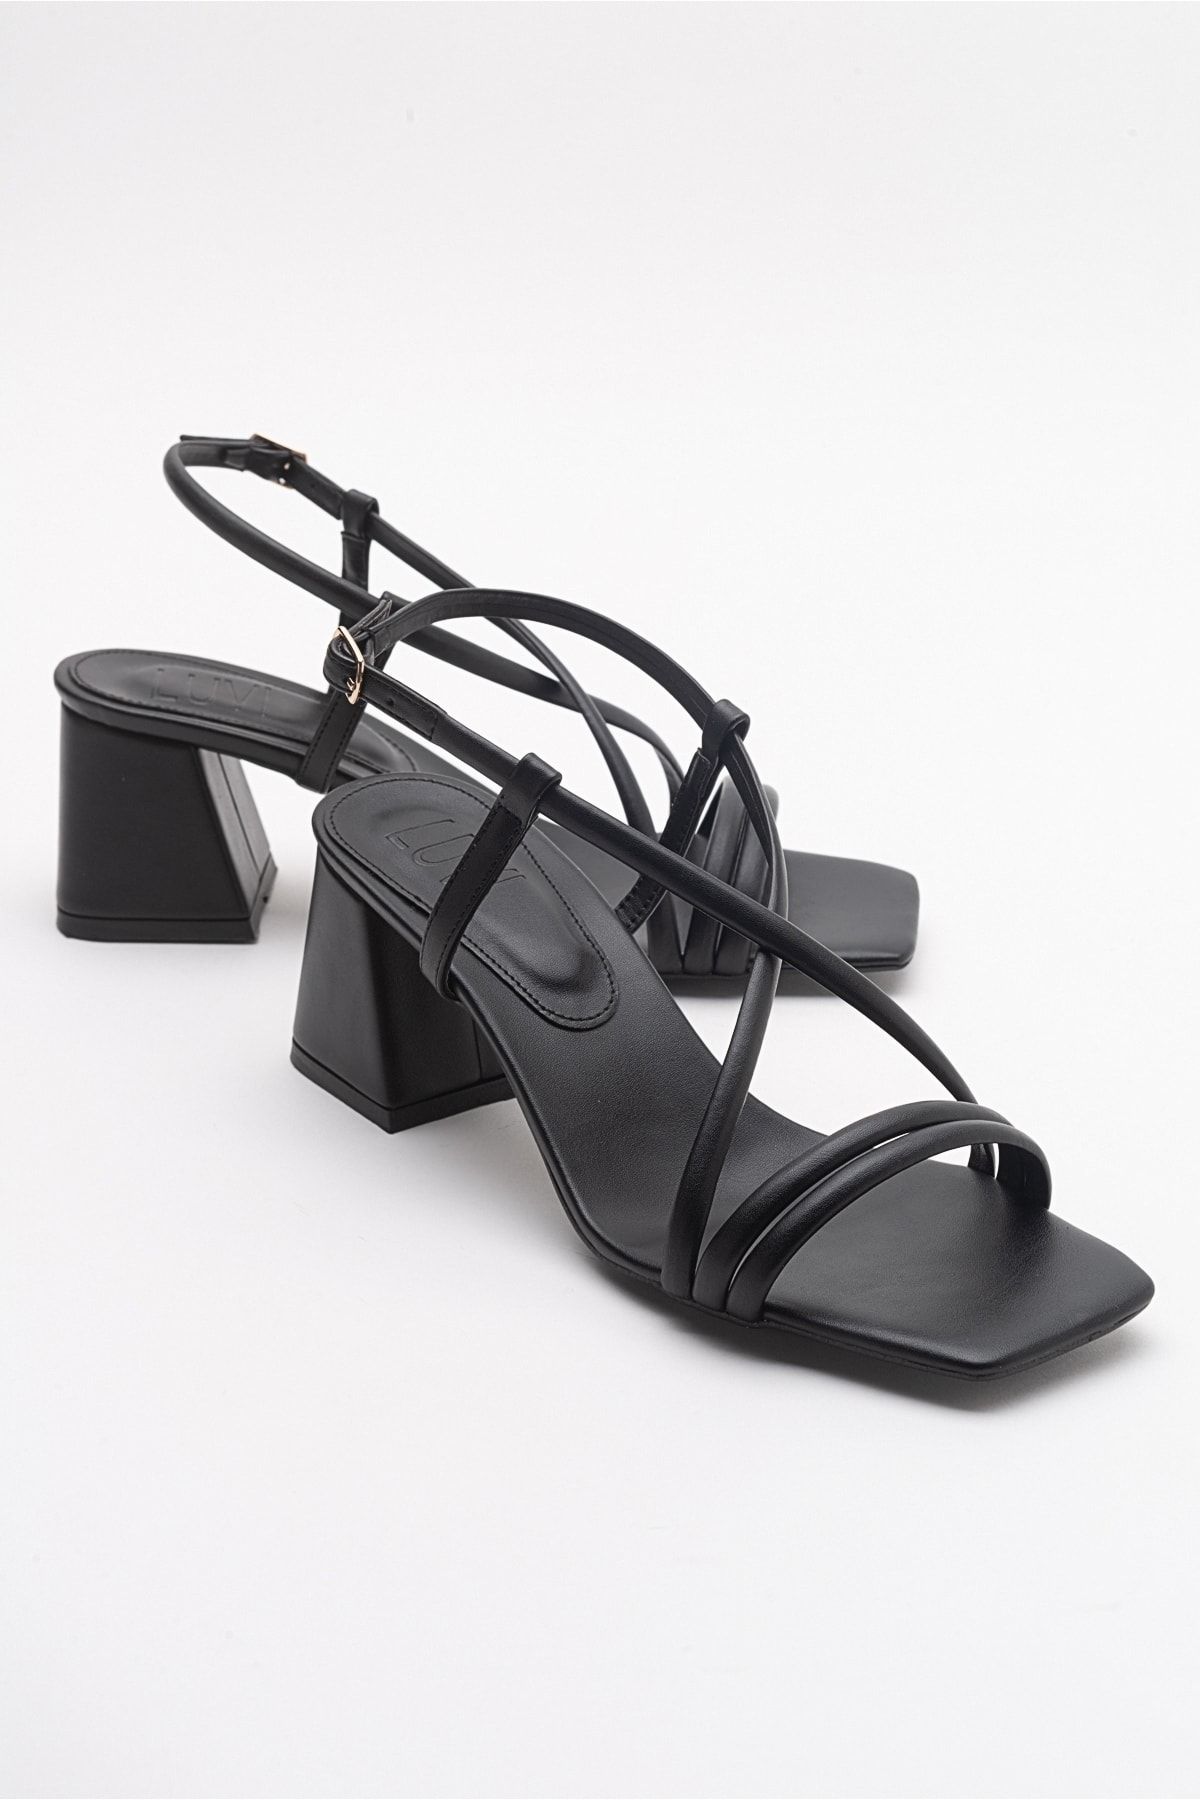 luvishoes Daisy Siyah Cilt Kadın Topuklu Ayakkabı